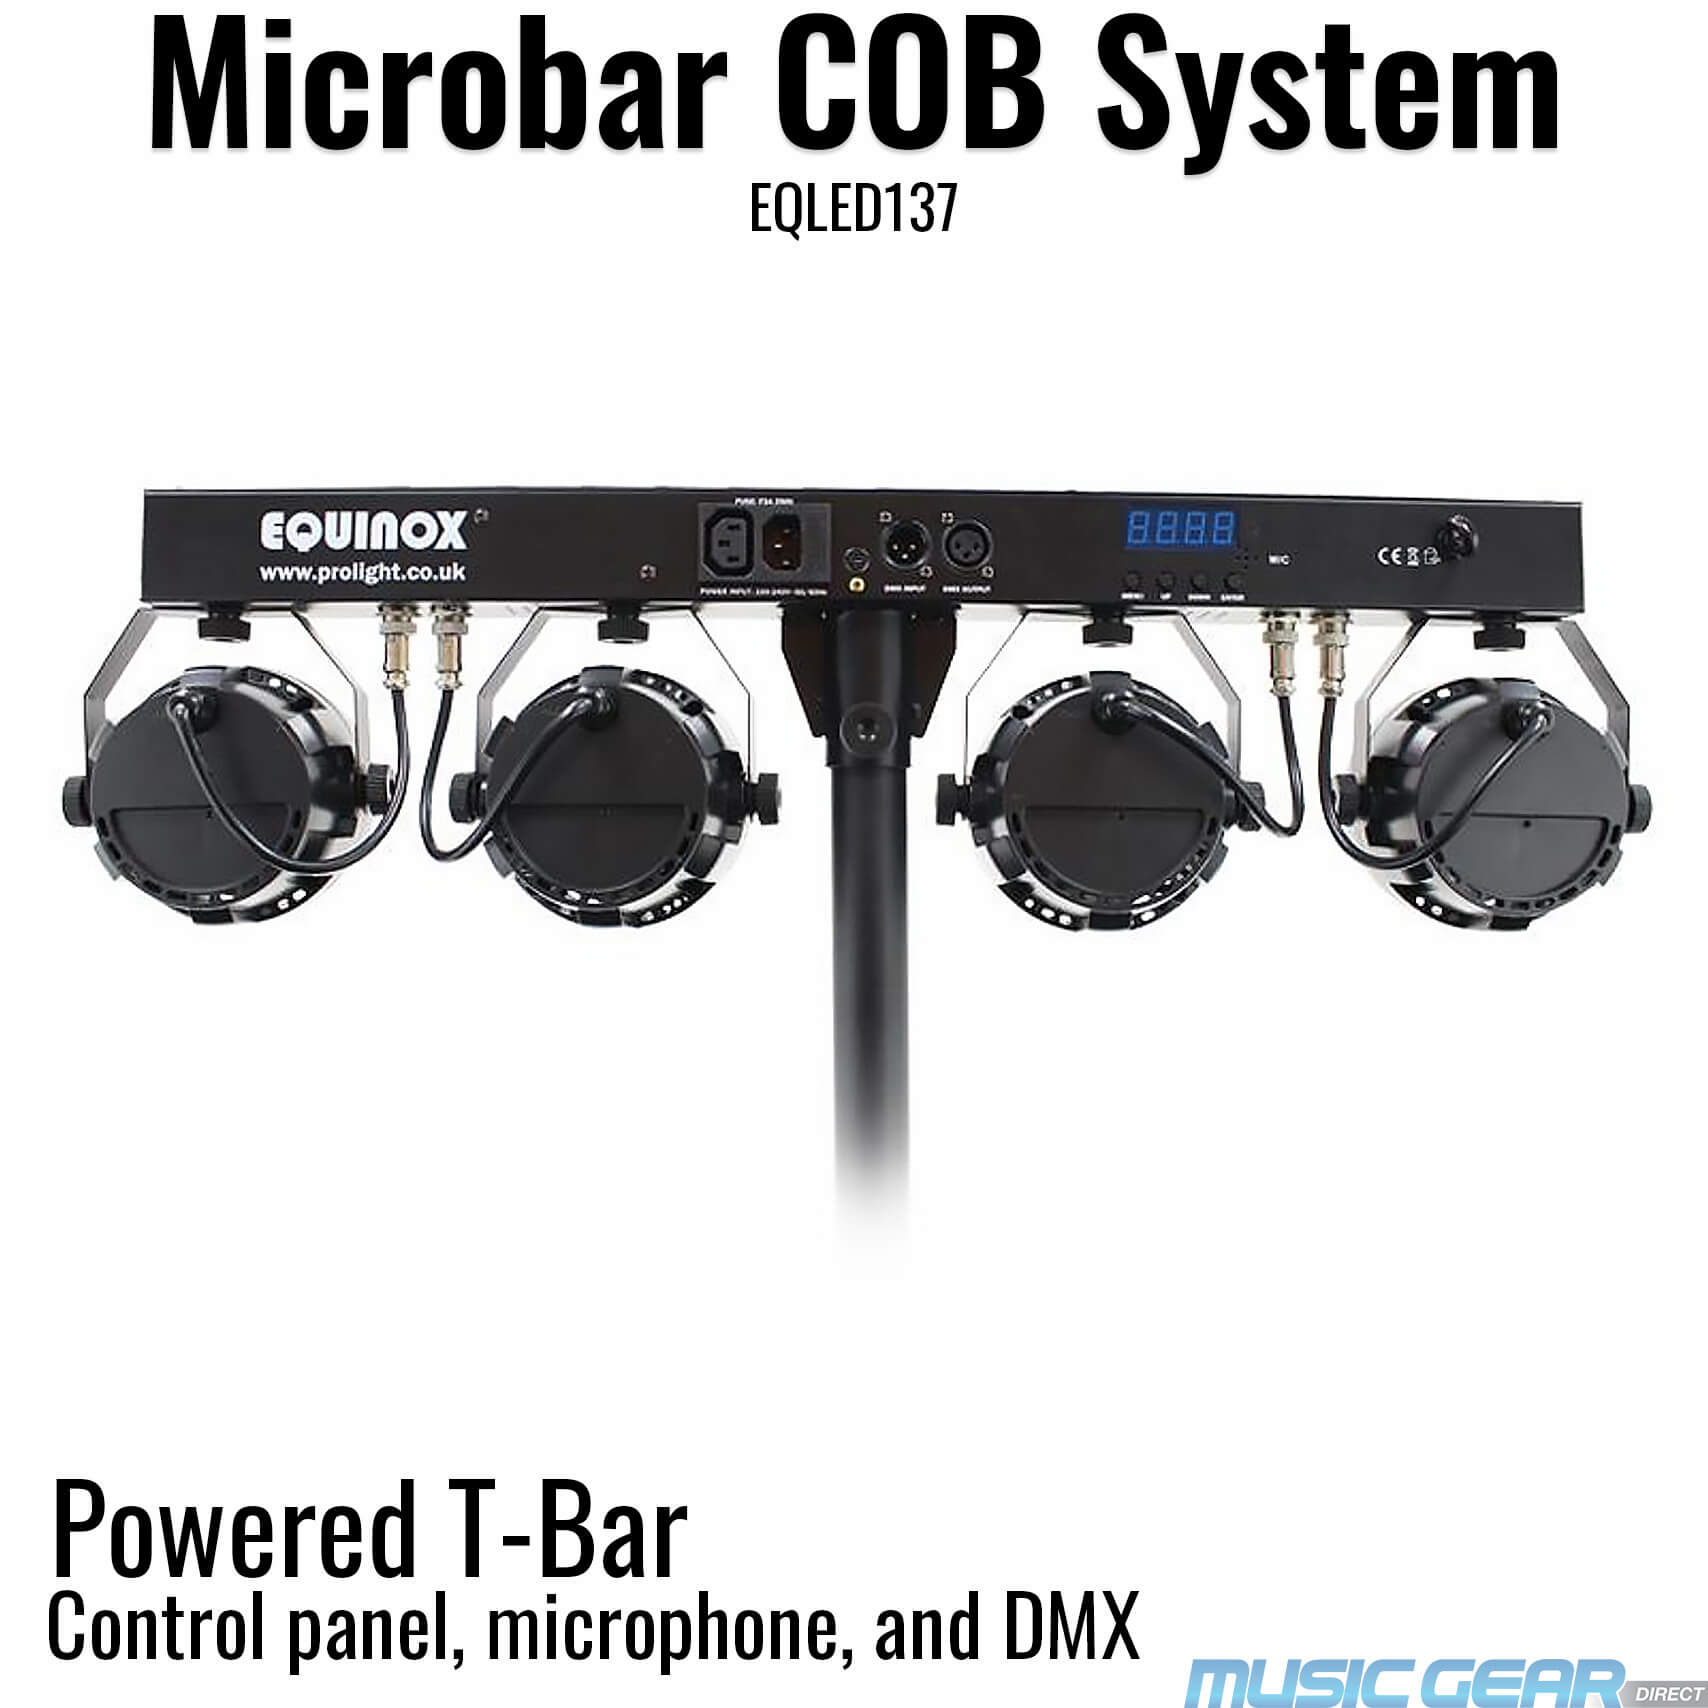 Equinox Microbar COB System Back Panel